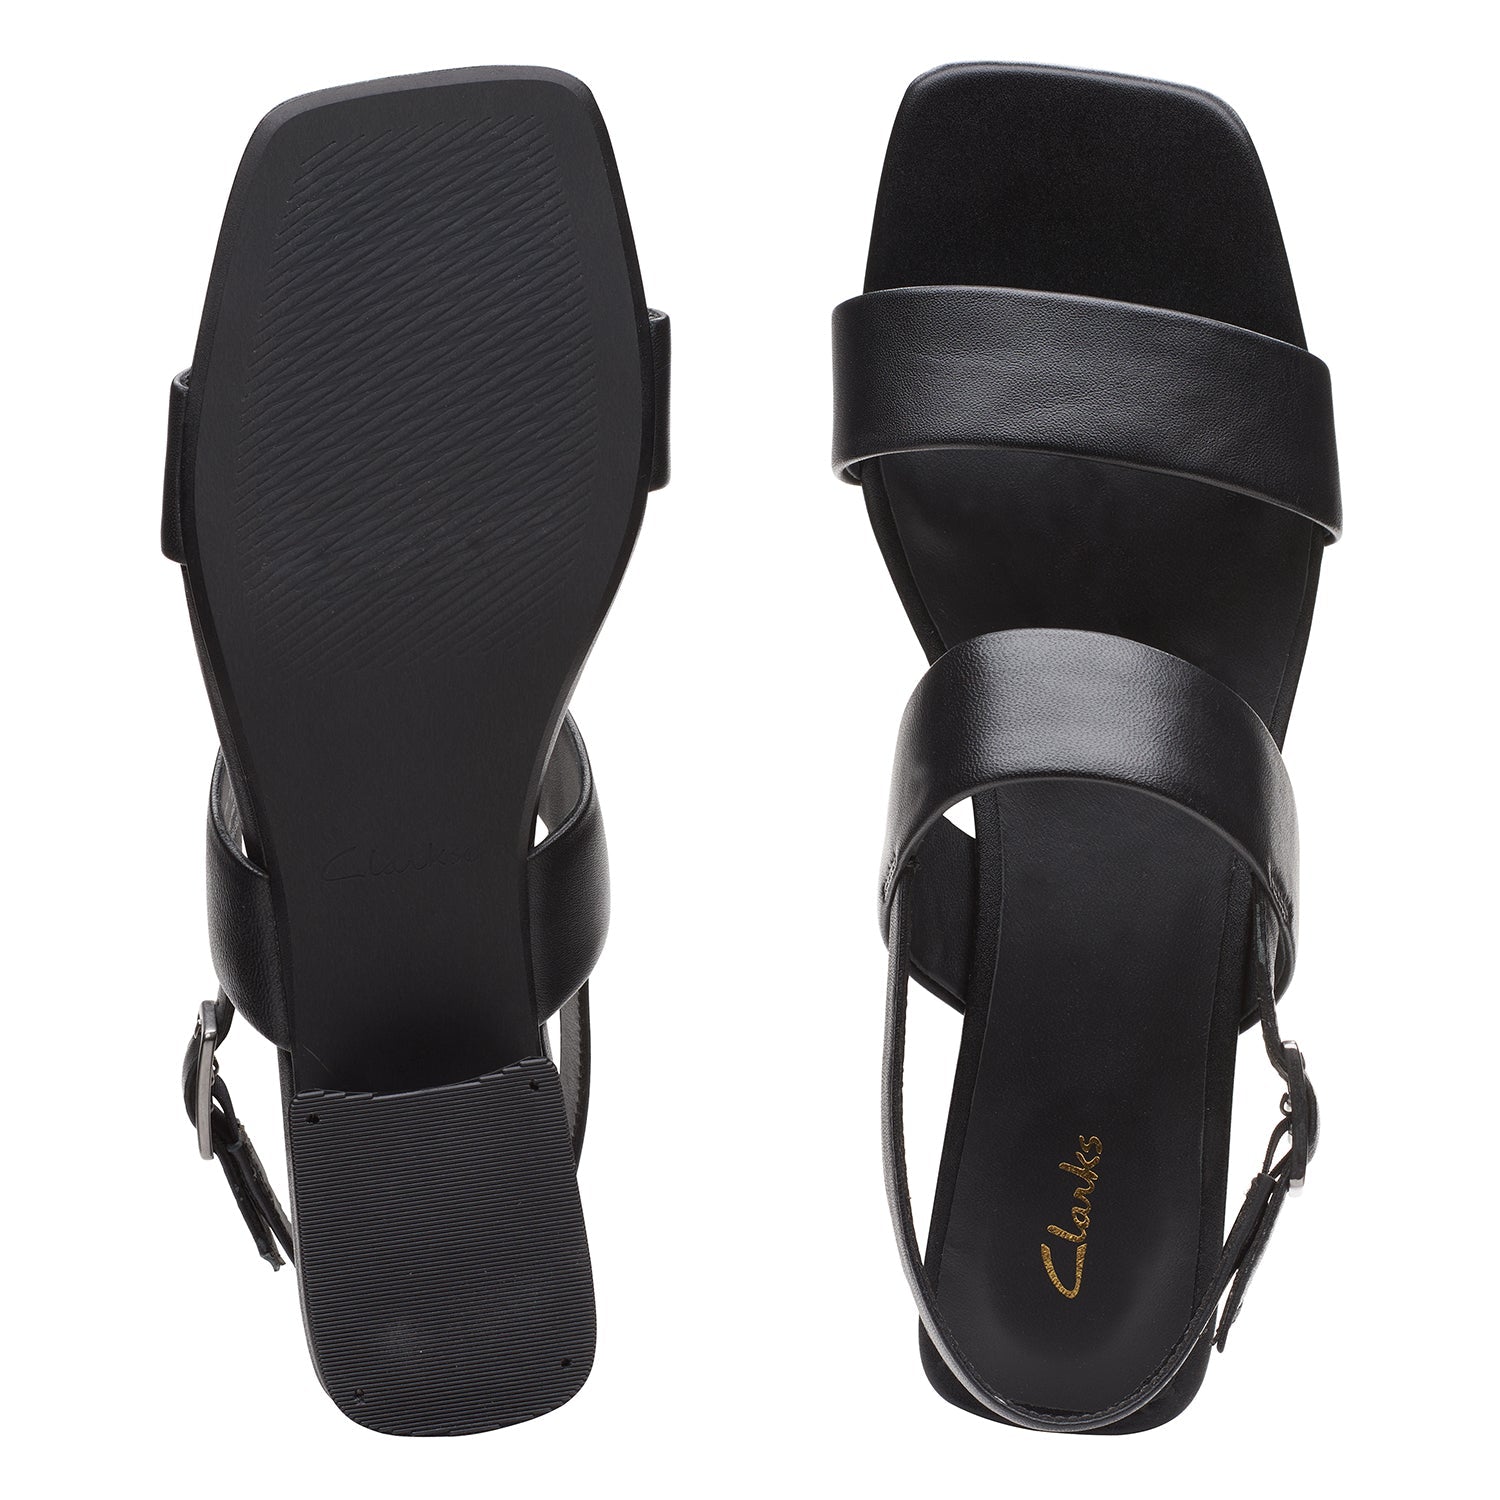 Clarks Seren25 Strap Sandals - Black Leather - 261648964 - D Width (Standard Fit)